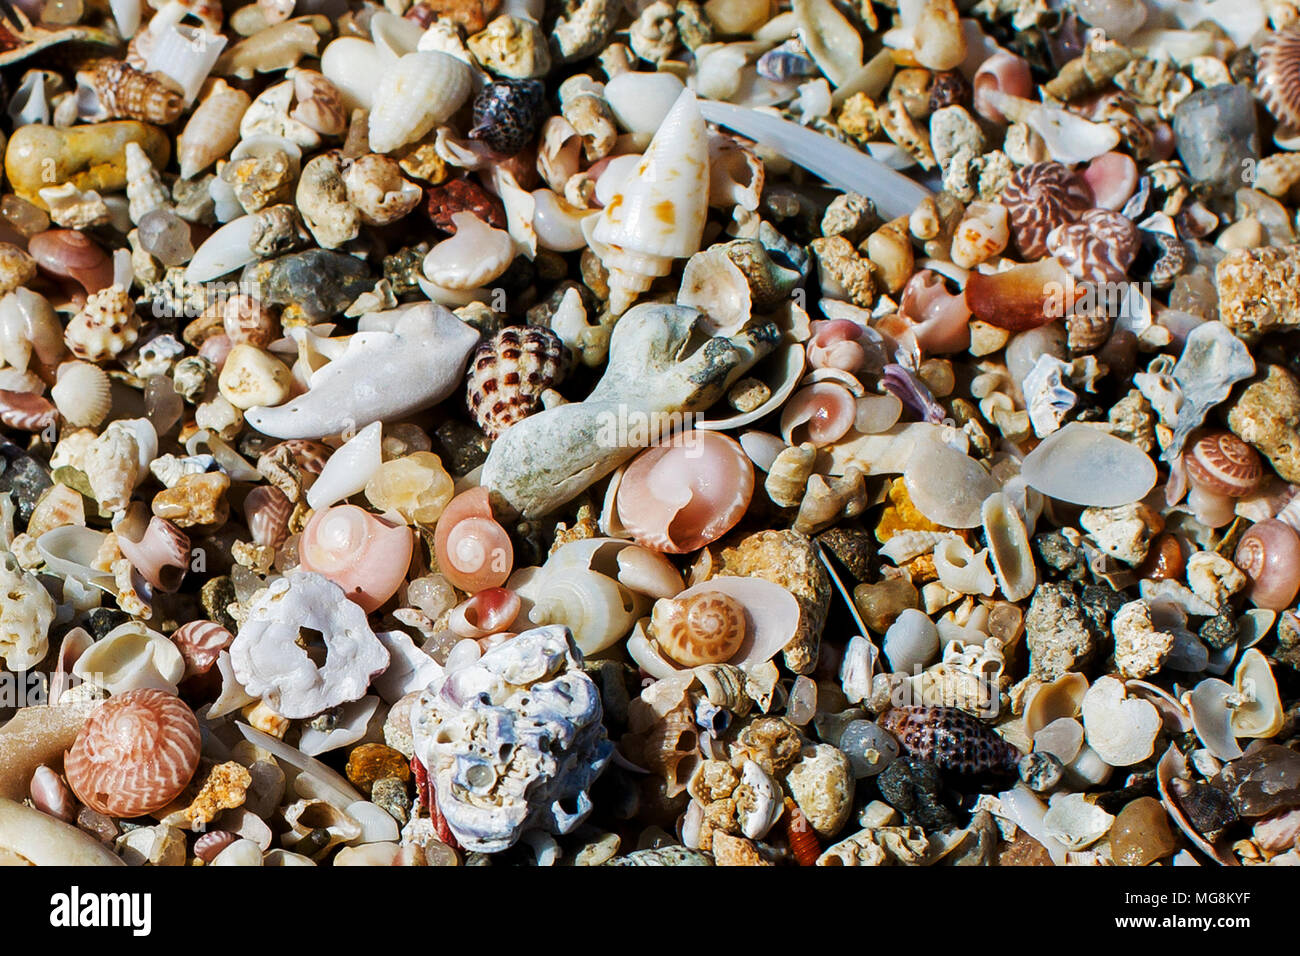 Seashells abundant on the shores of Kuwait's beaches Stock Photo